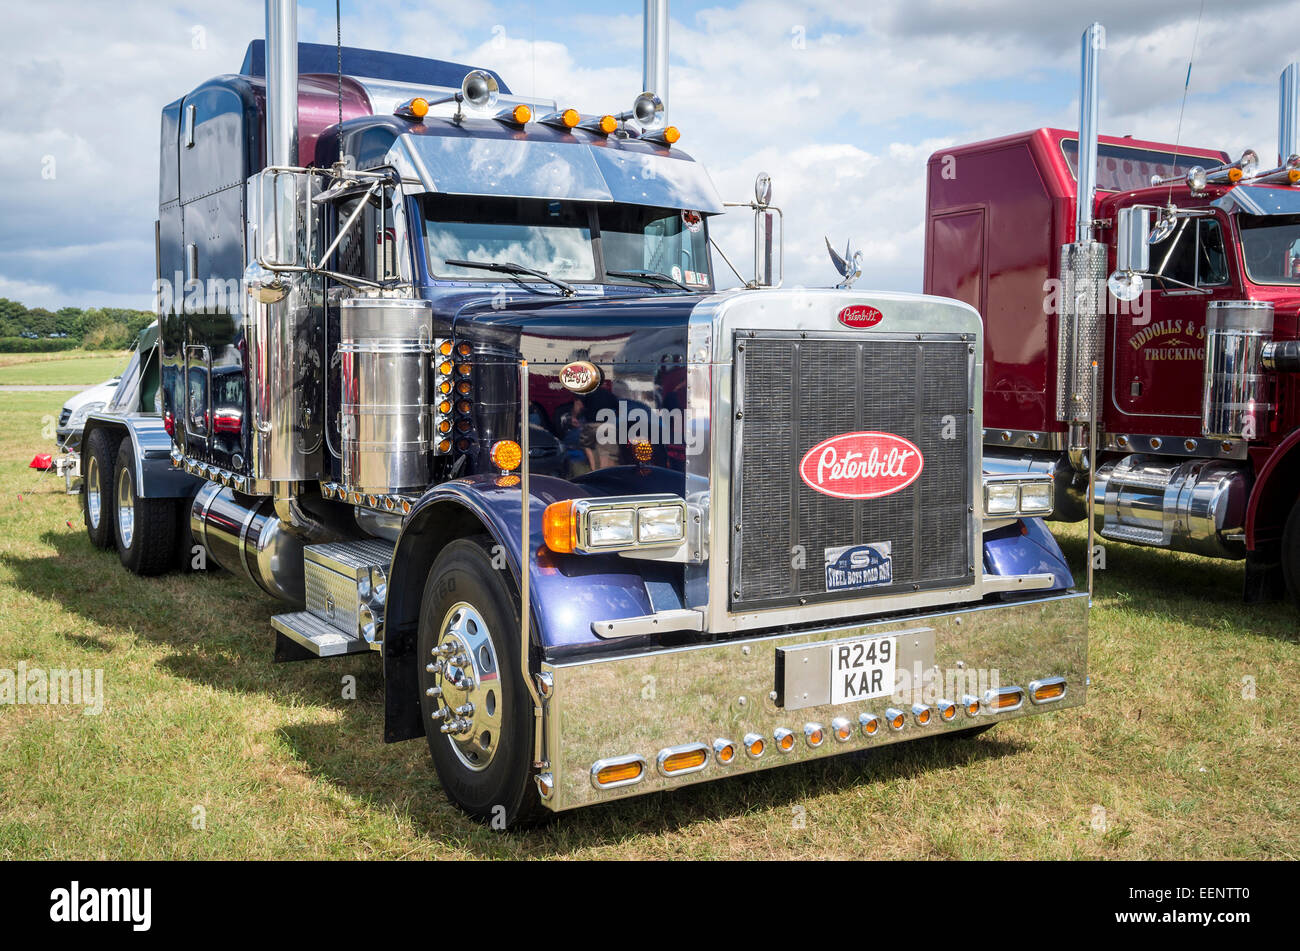 American Peterbilt truck at an English show 2014 Stock Photo